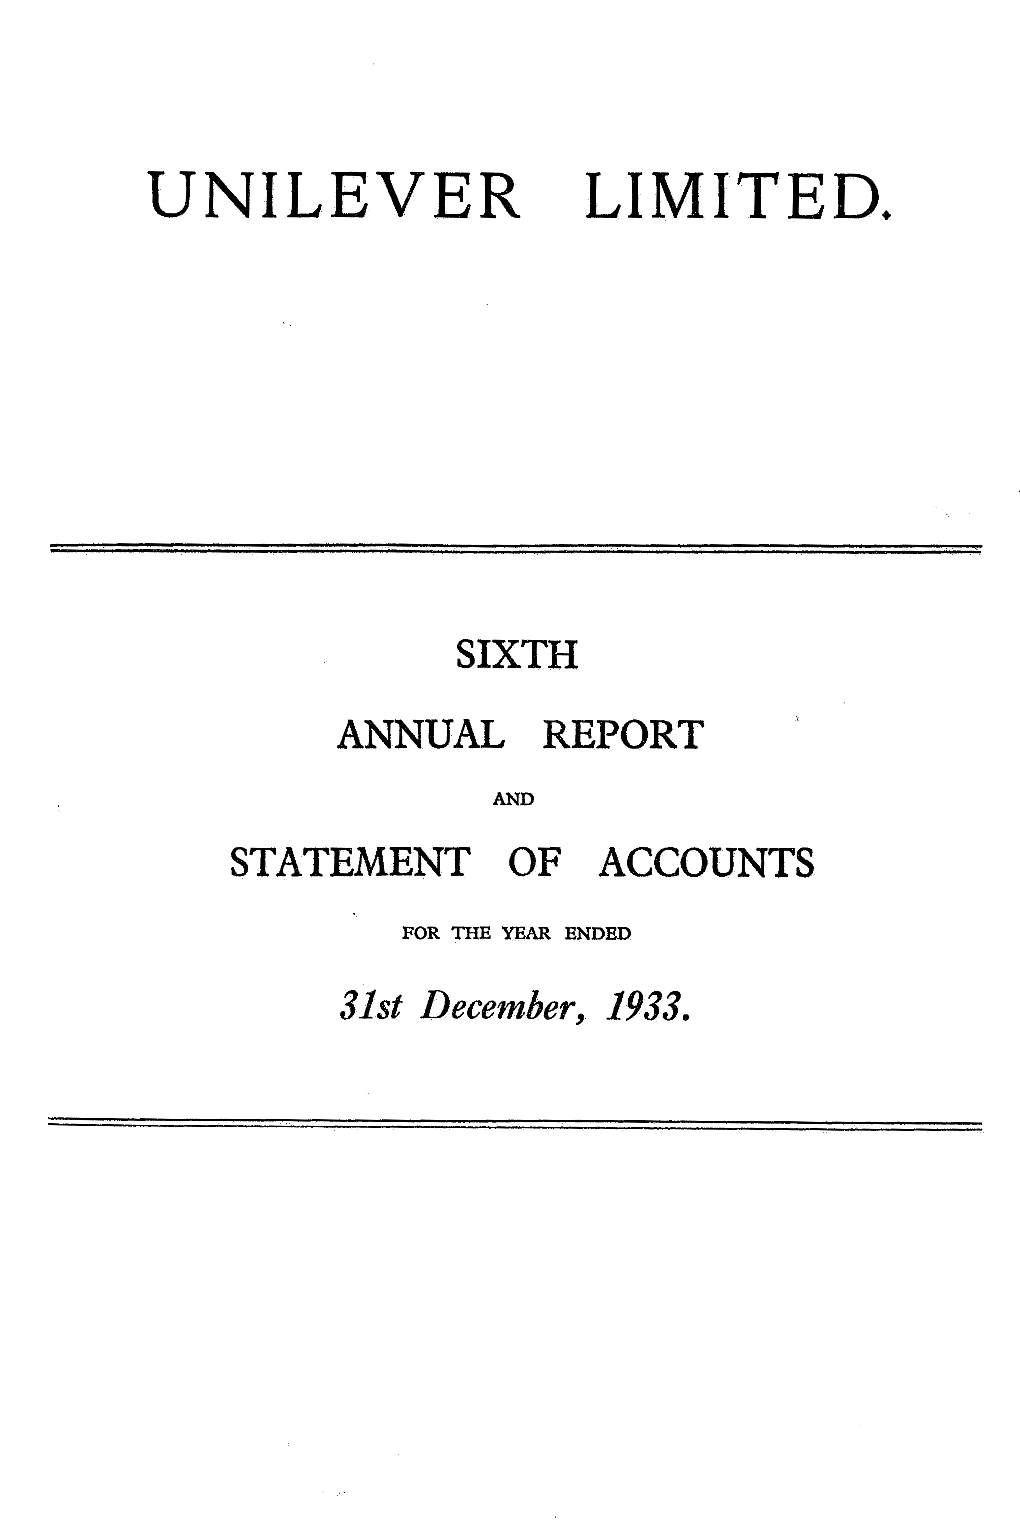 1933 Annual Report